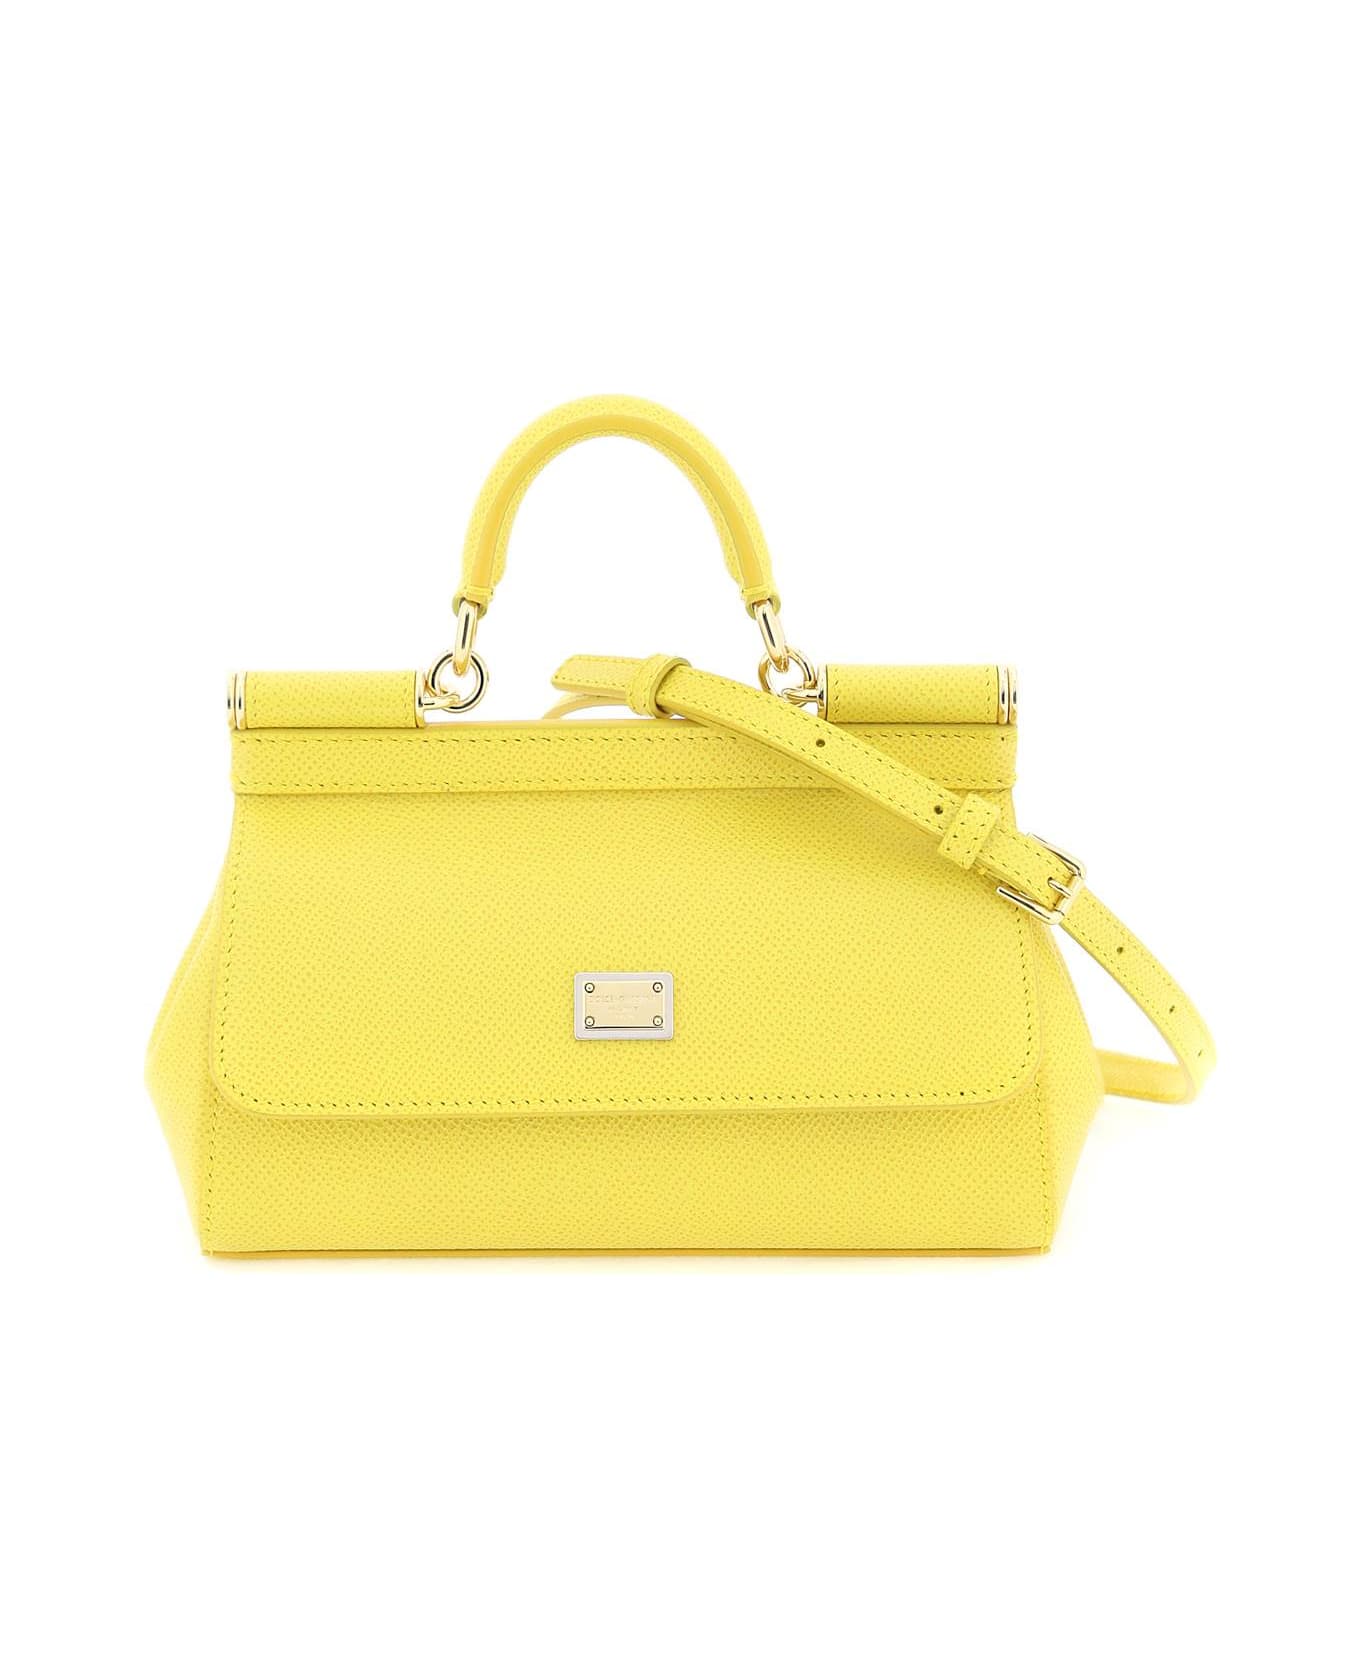 Dolce & Gabbana Sicily Handbag - GIALLO INTENSO (Yellow) トートバッグ